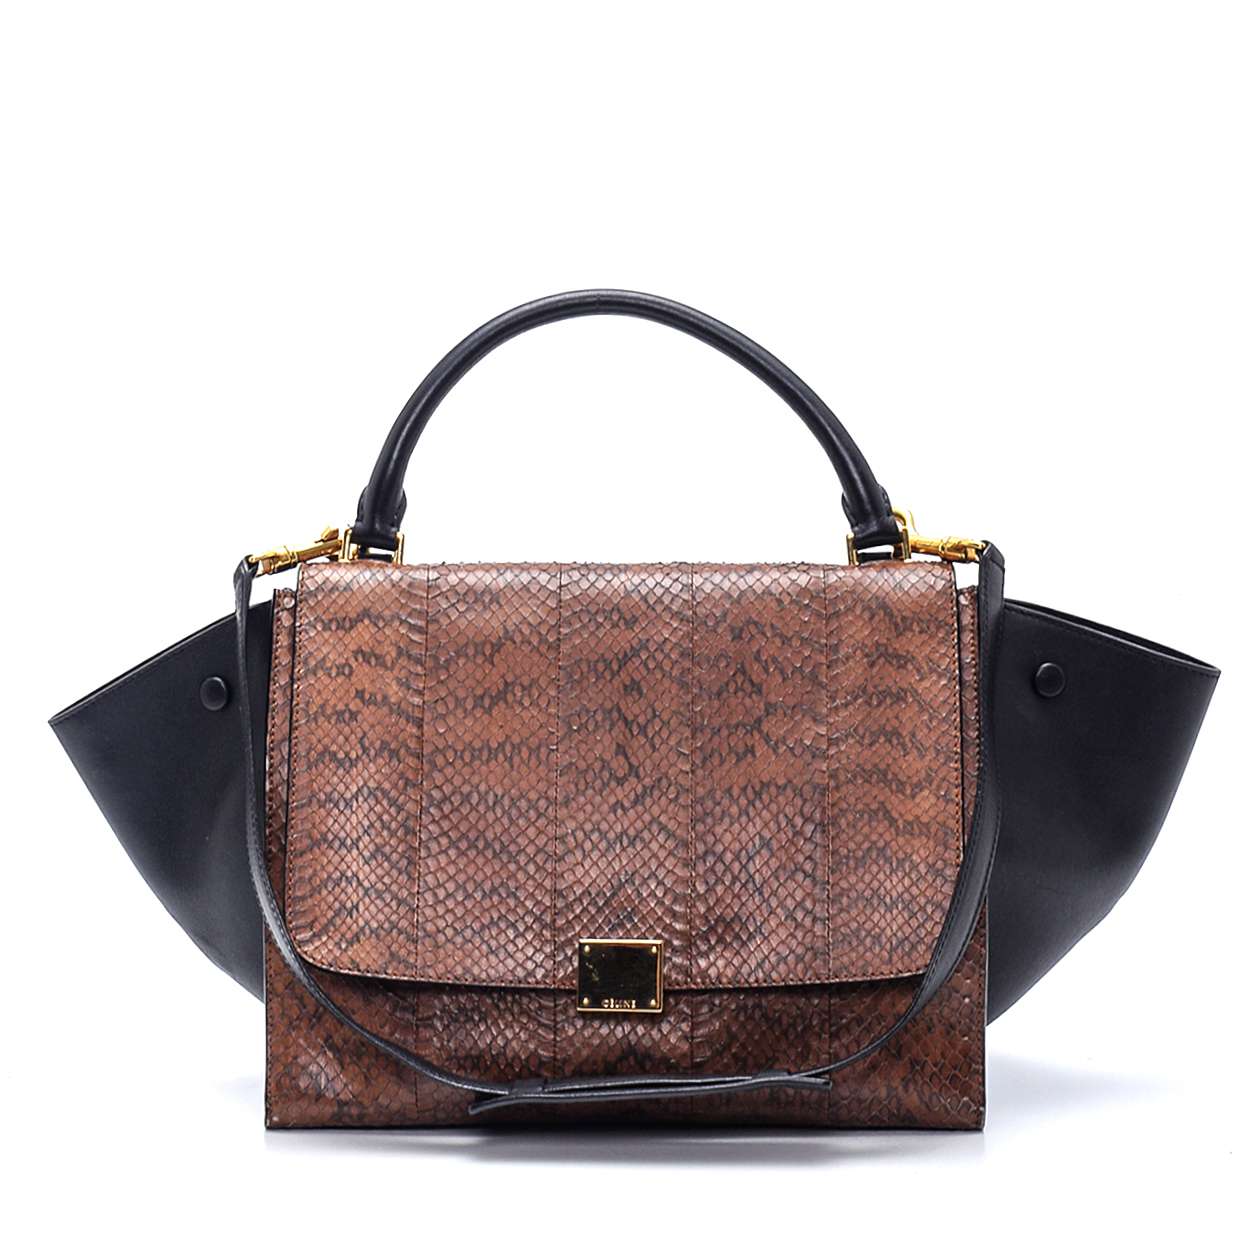 Celine - Black & Brown Leather Medium Trapeze Bag